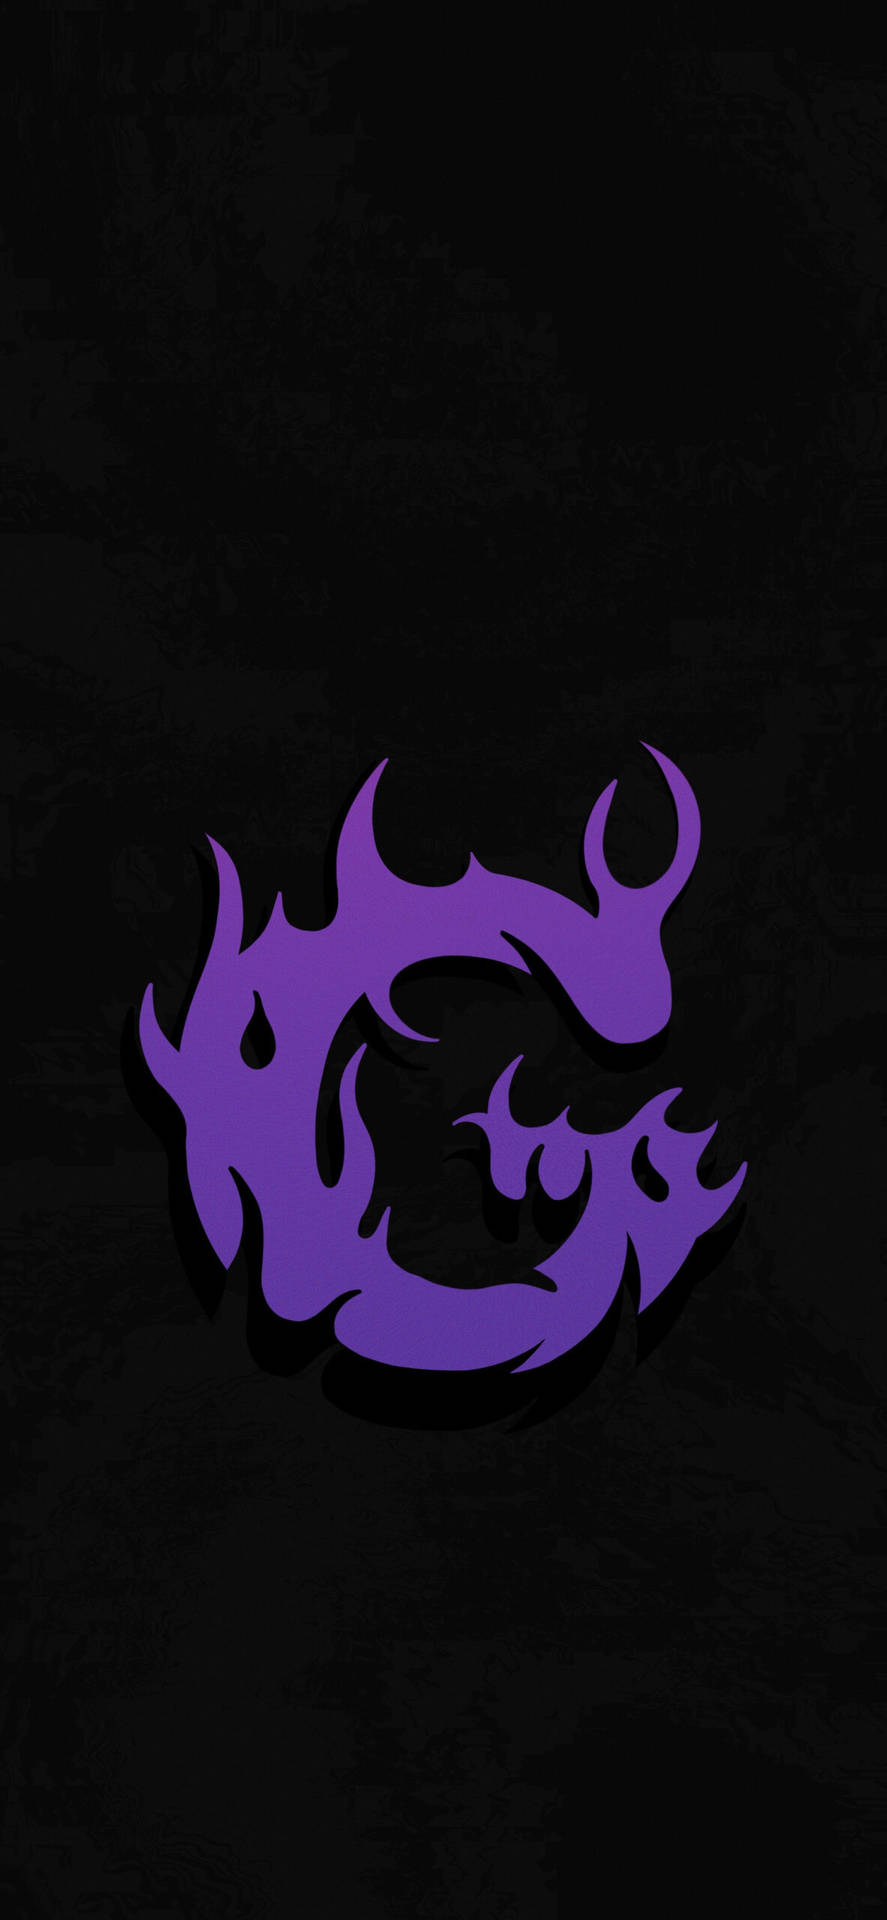 Letter G In Purple Flames